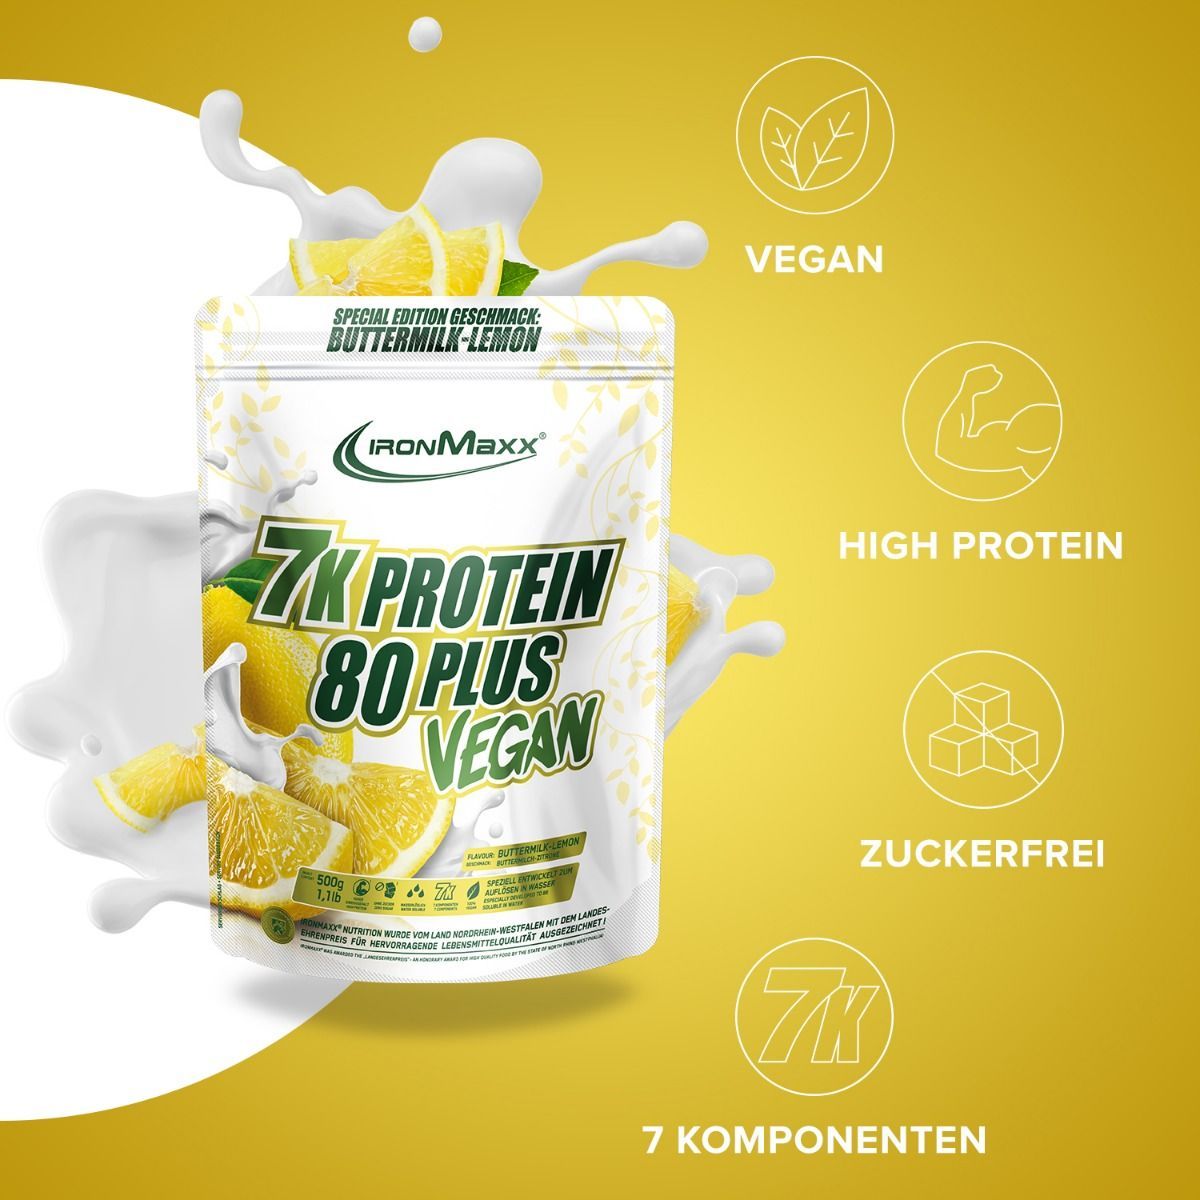 Протеин IronMaxx Vegan Protein 7k - 80 Plus Пахта-Лимон 500 г - фото 2